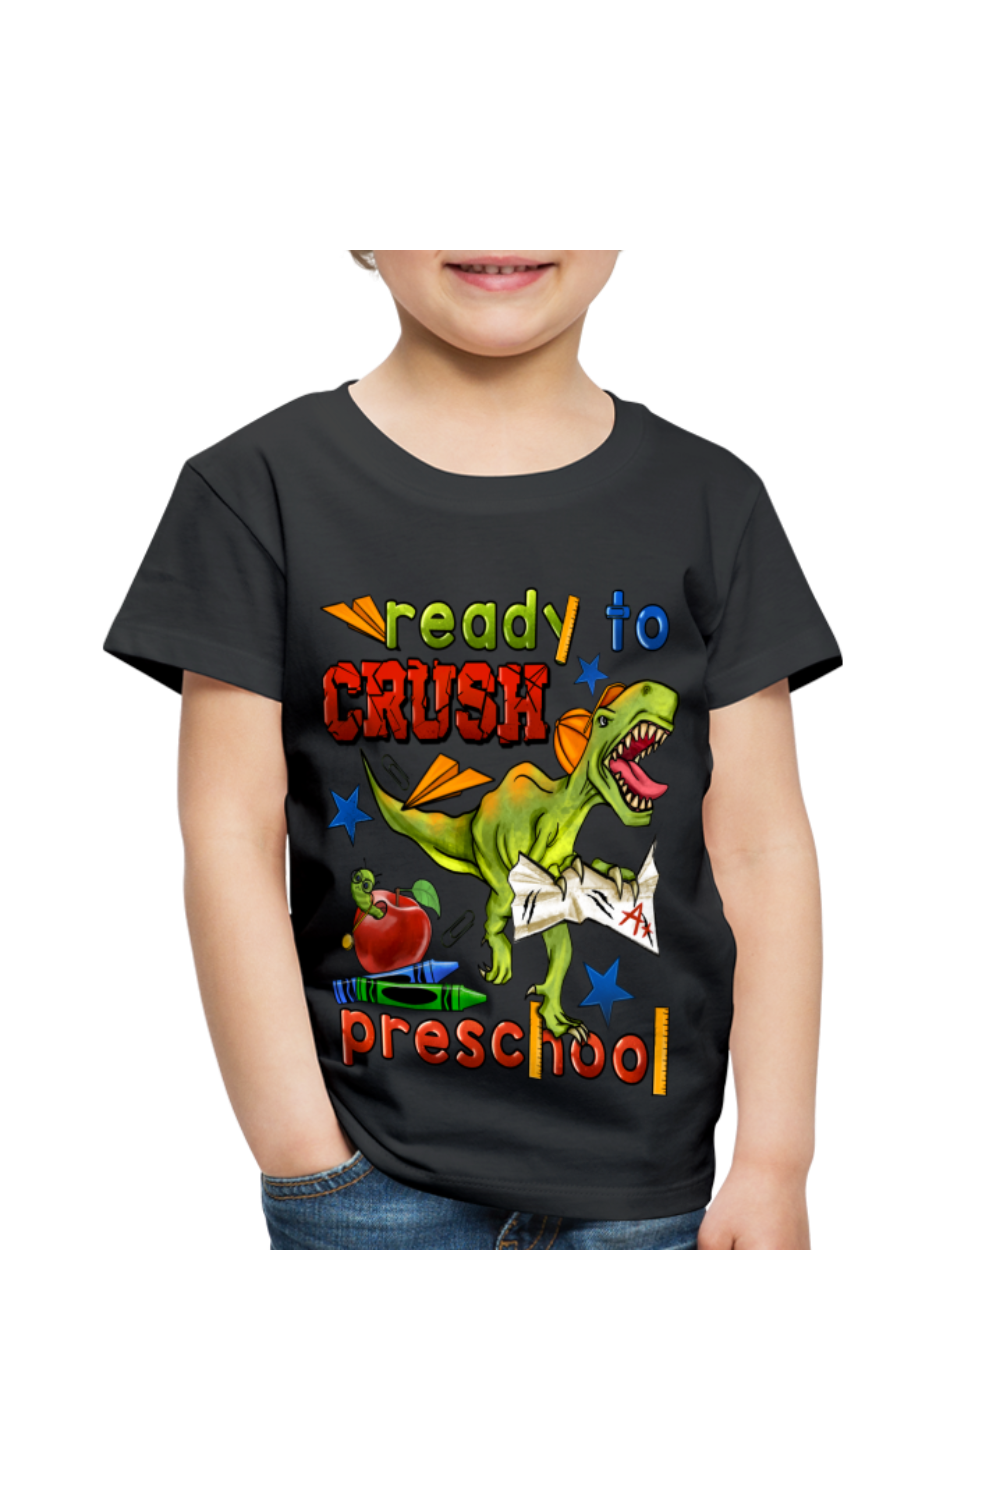 Toddler Boys Ready To Crush Preschool Short Sleeve Tee Shirt for Back To School - black